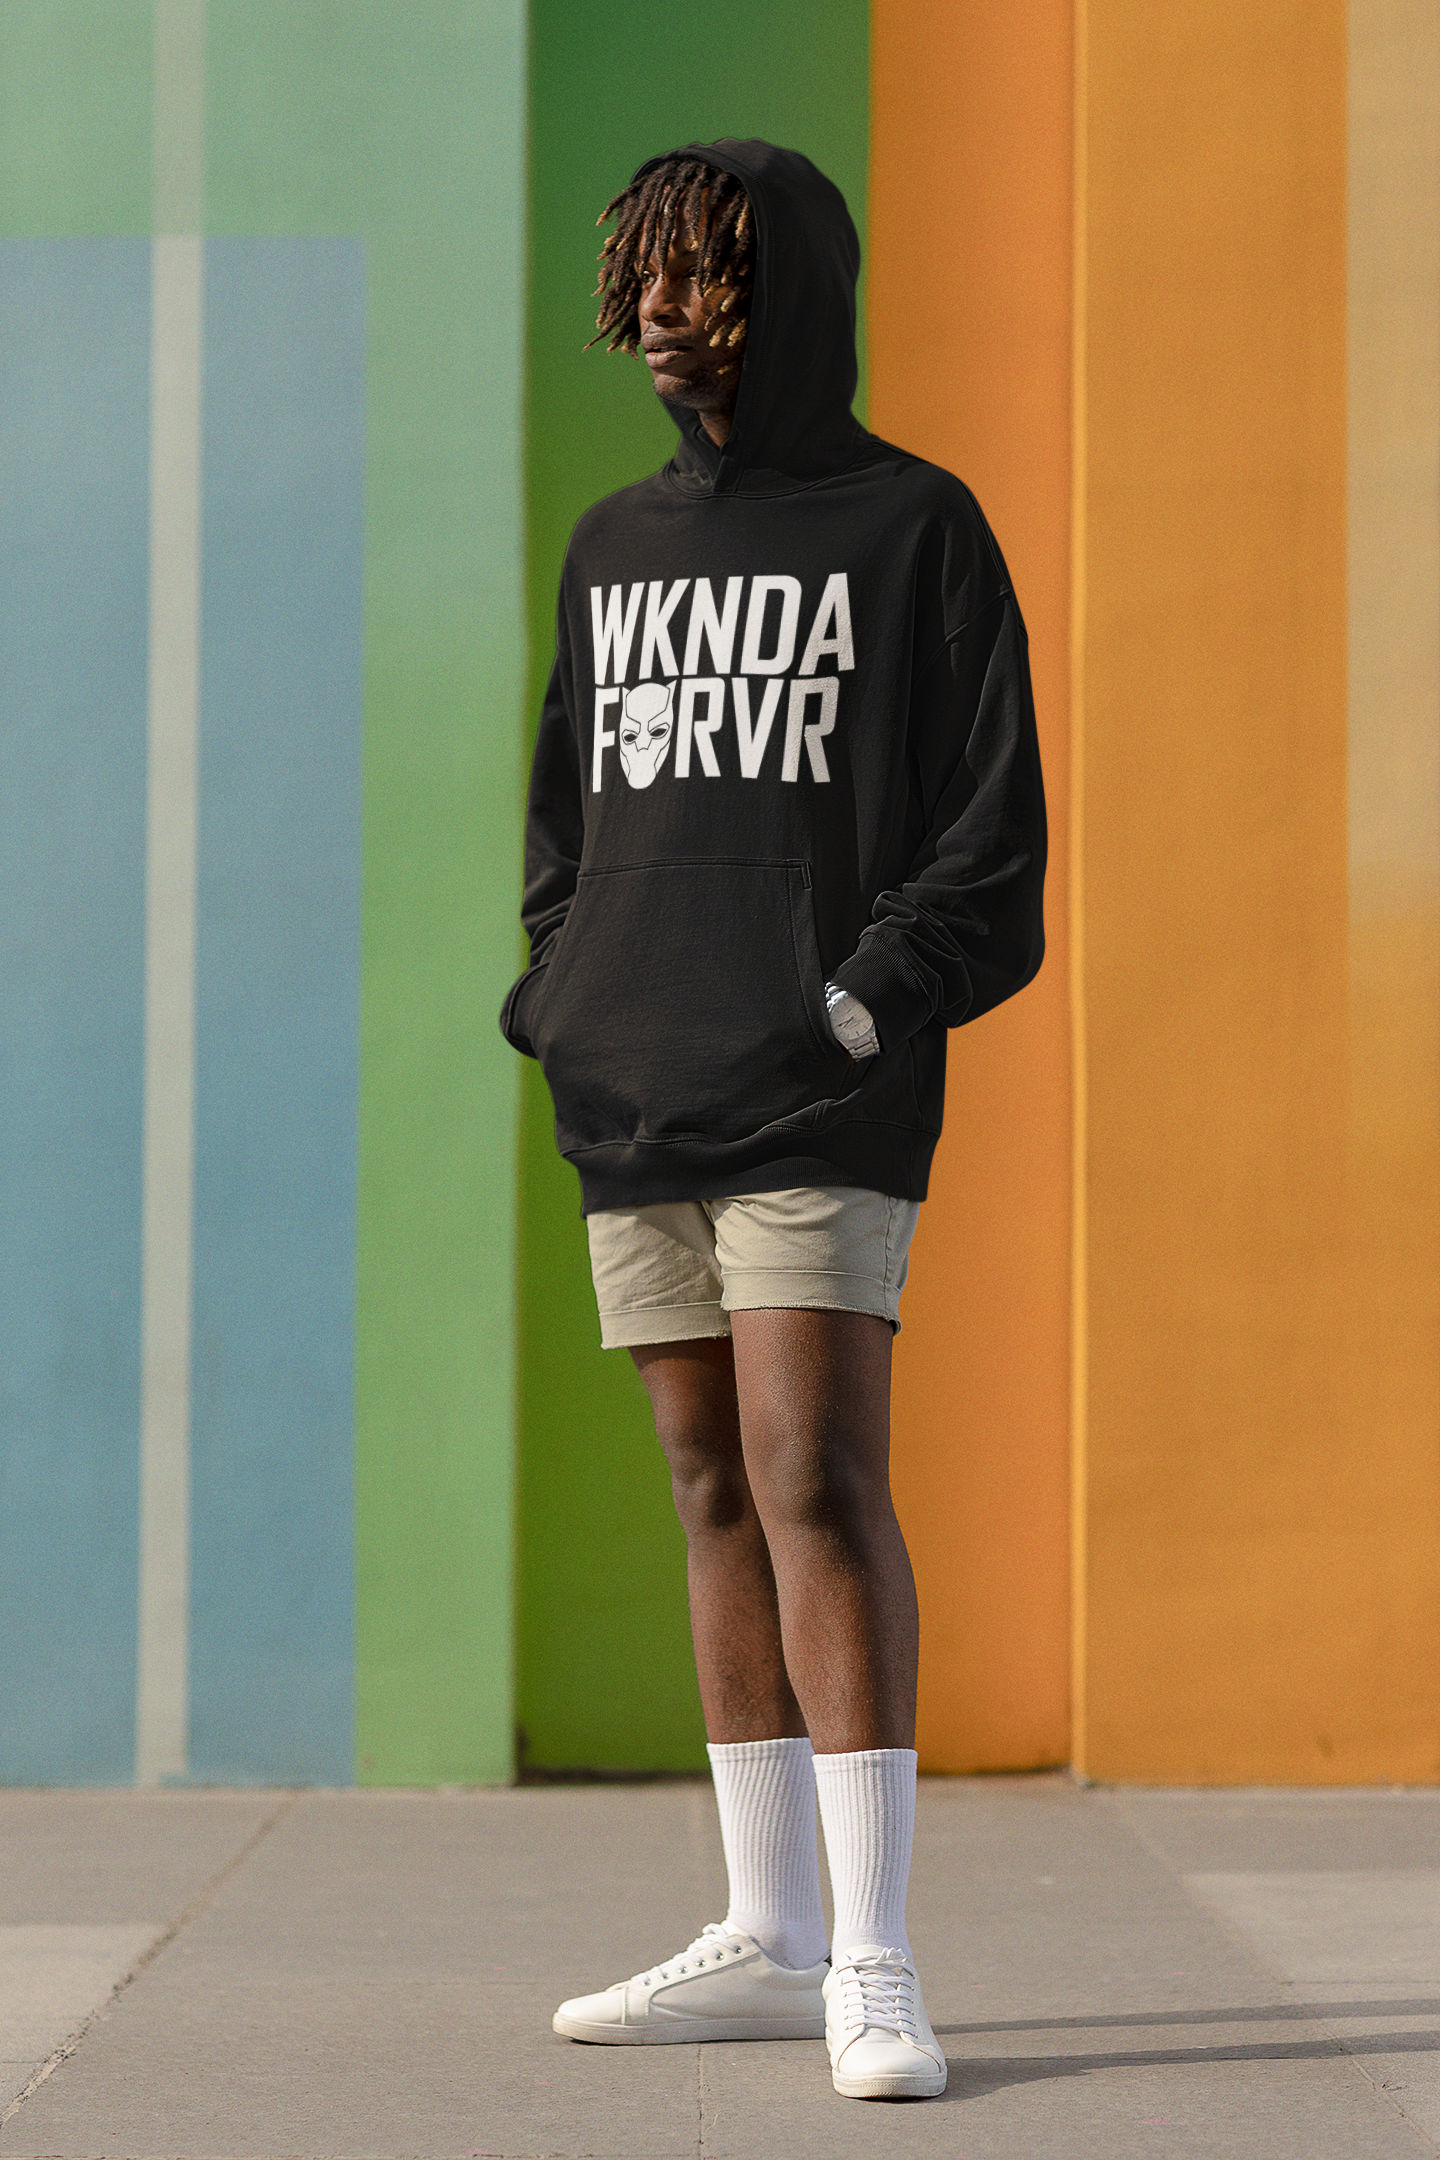 "WKNDA FRVR" Hoodie (Available in Dark Colors)